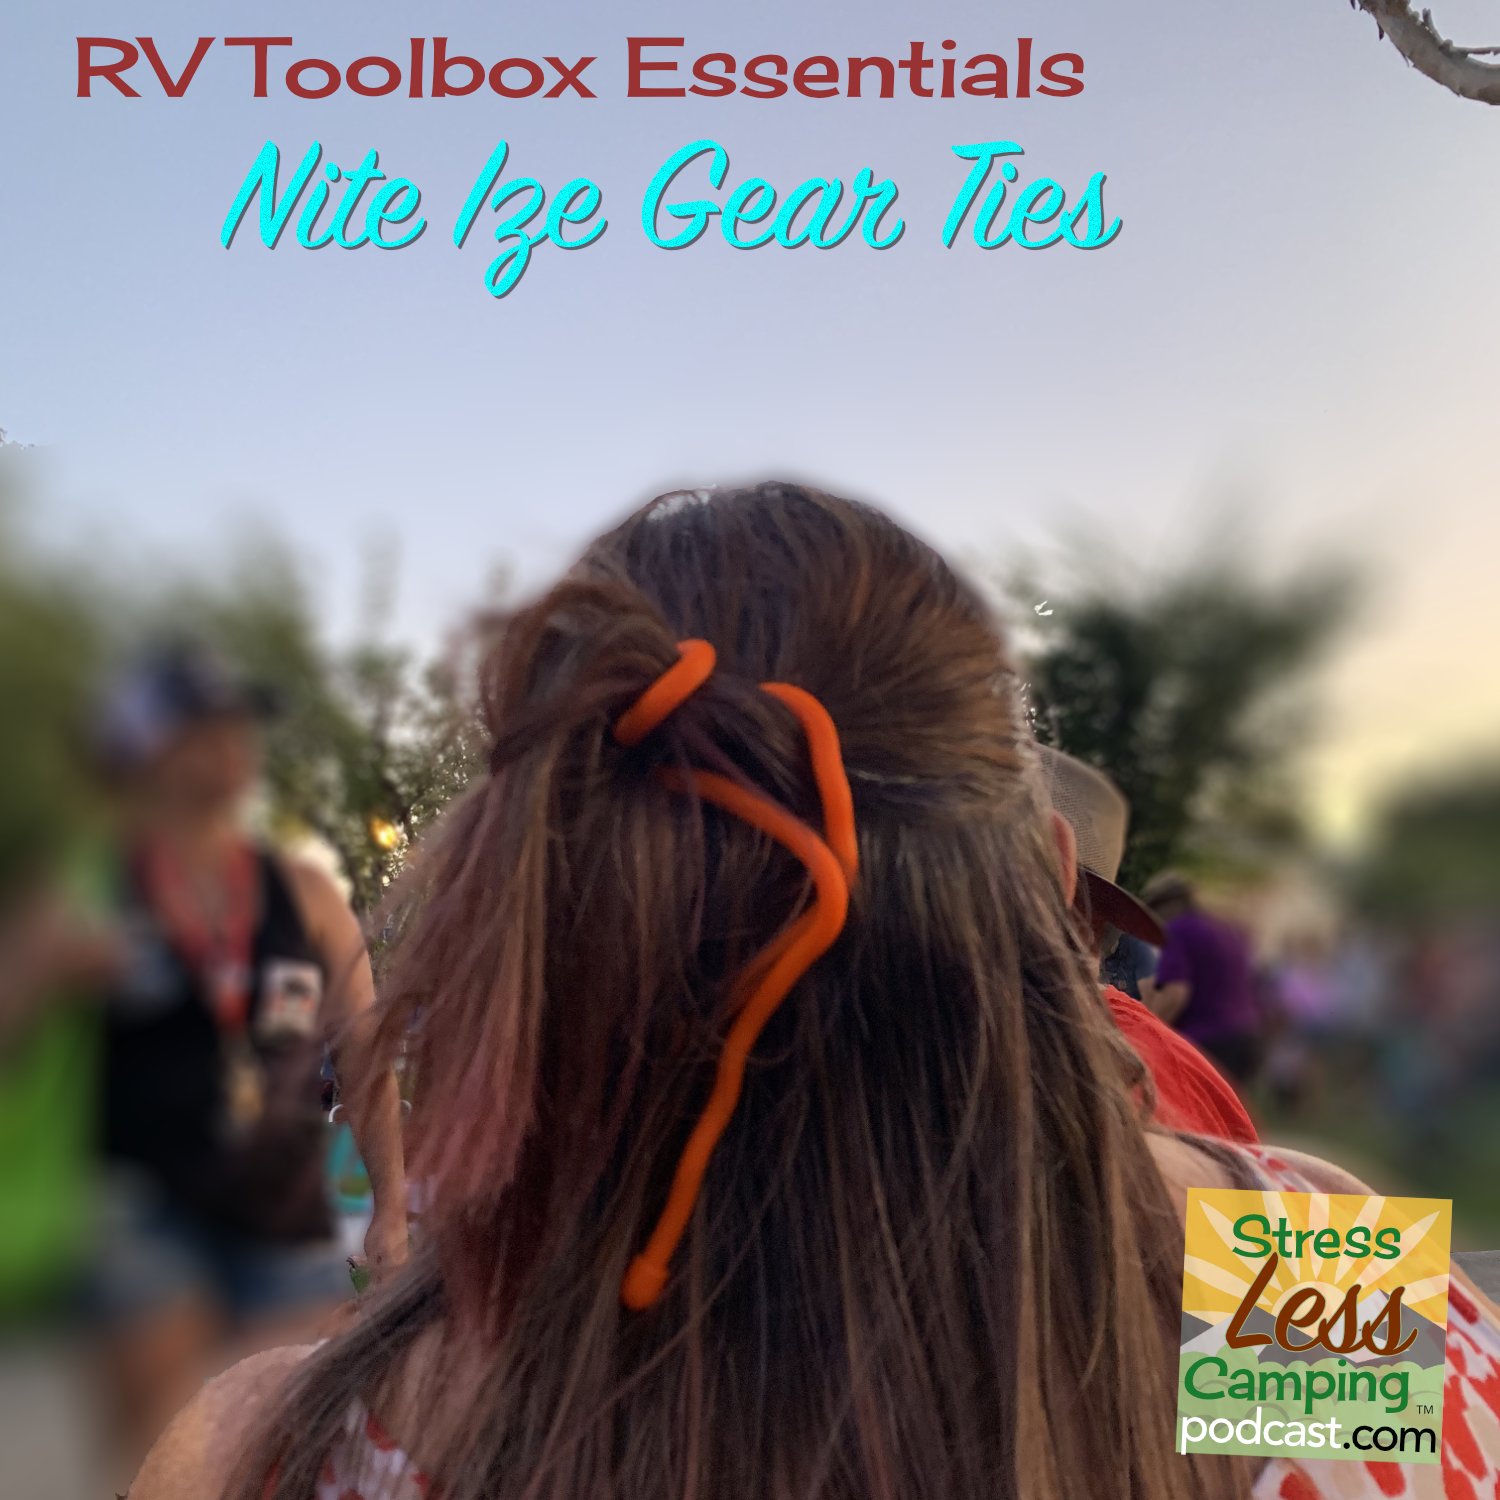 RV toolbox essential: Nite Ize gear ties